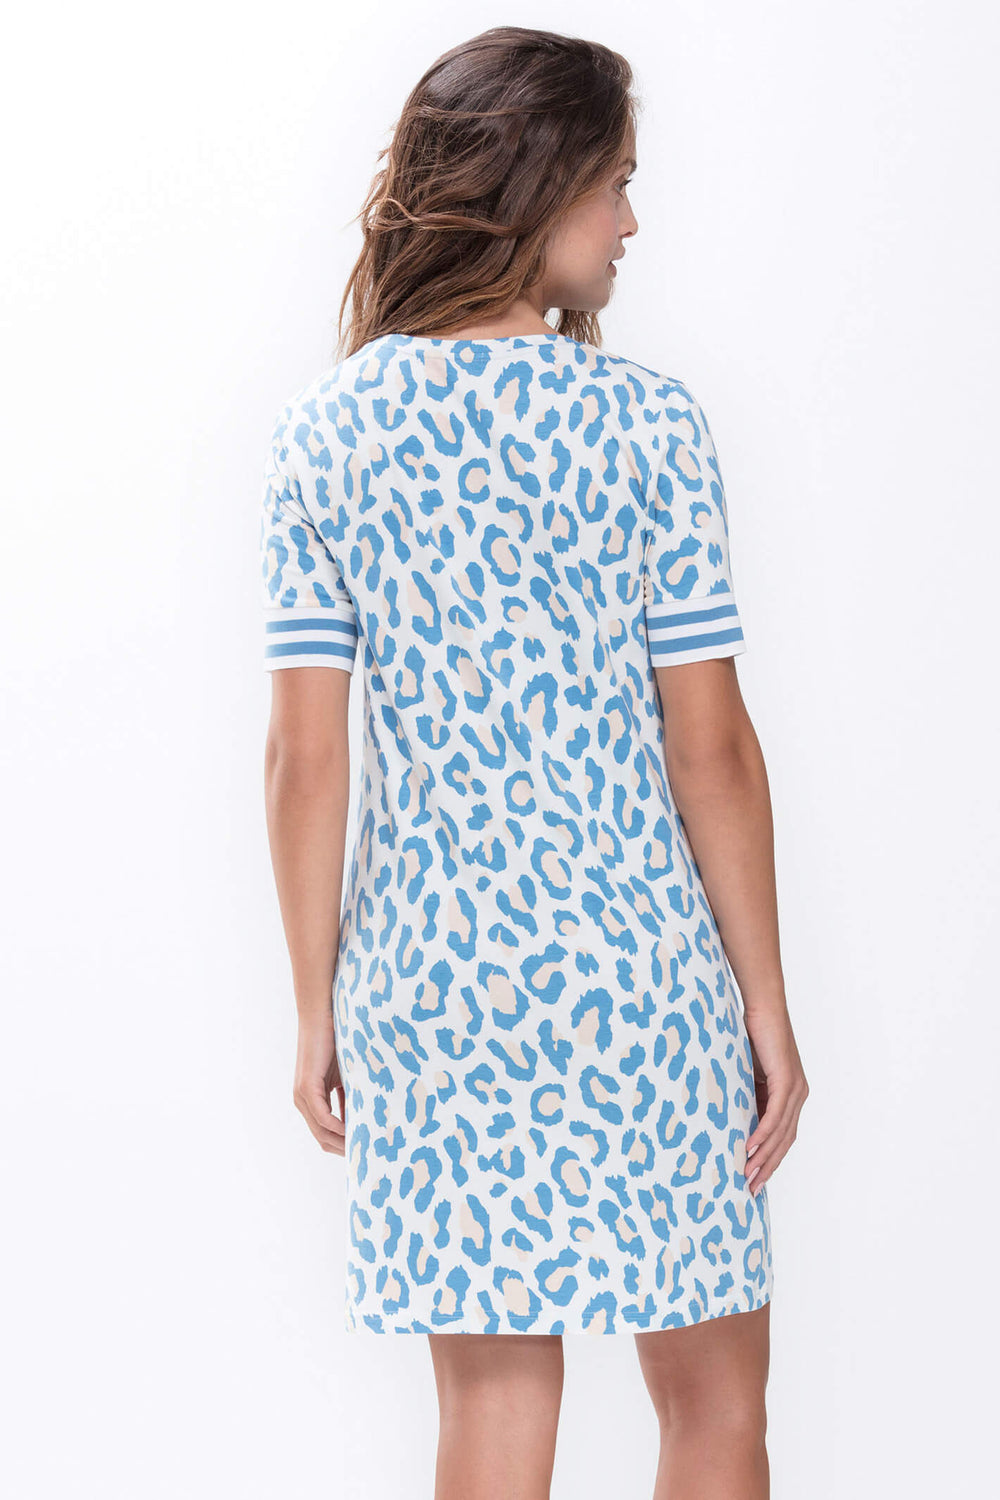 Mey 16342 Darla Pacific Blue Night Dress - Shirley Allum Boutique